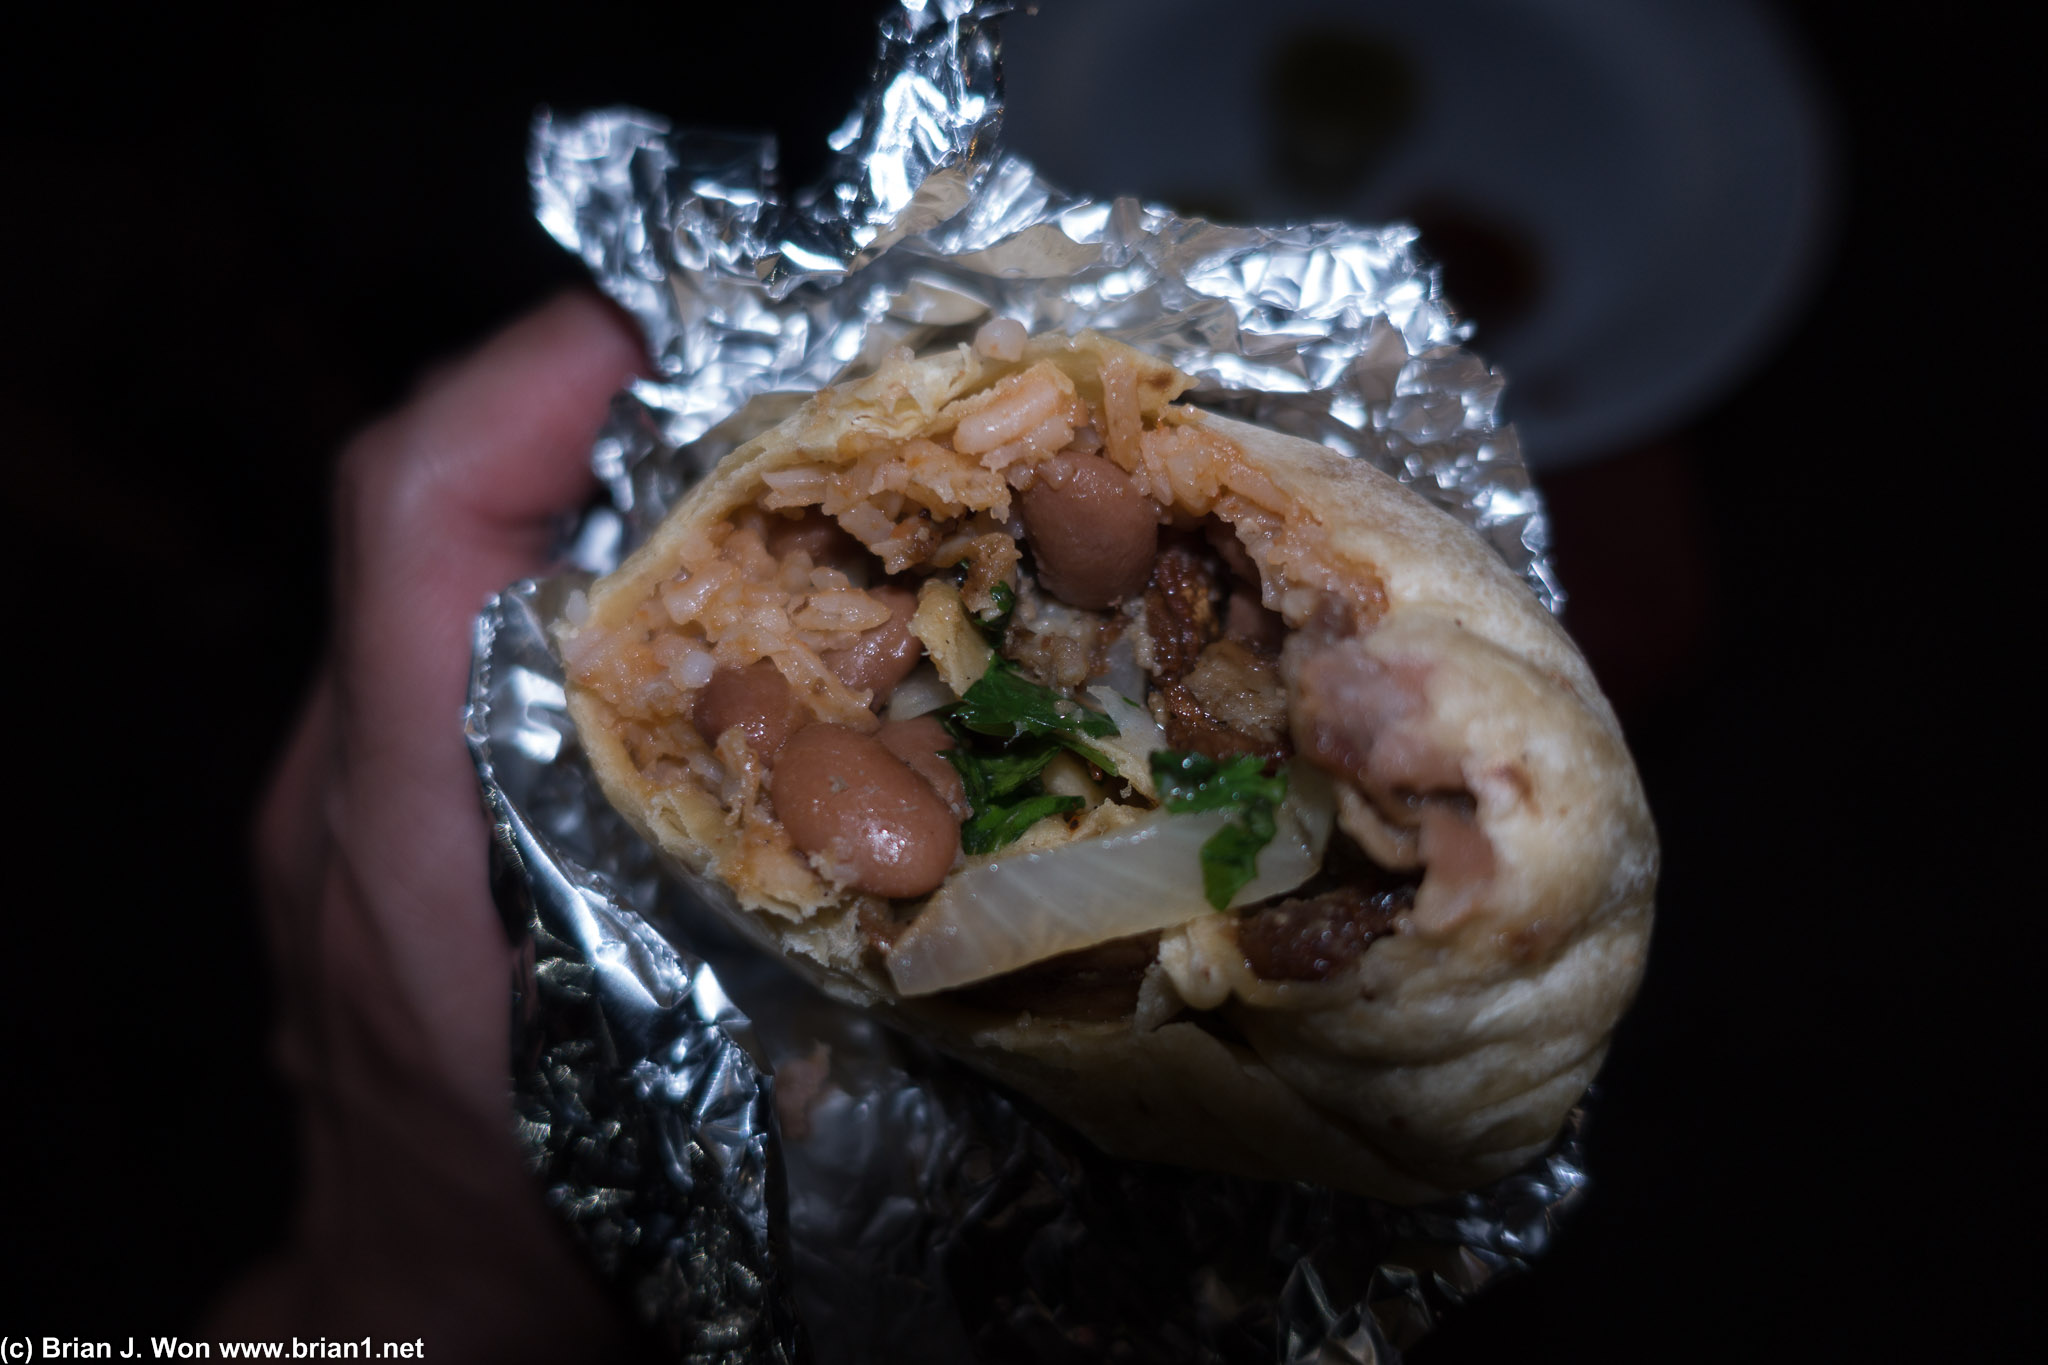 The taco truck across from The Palladium does a tasty tripas burrito.